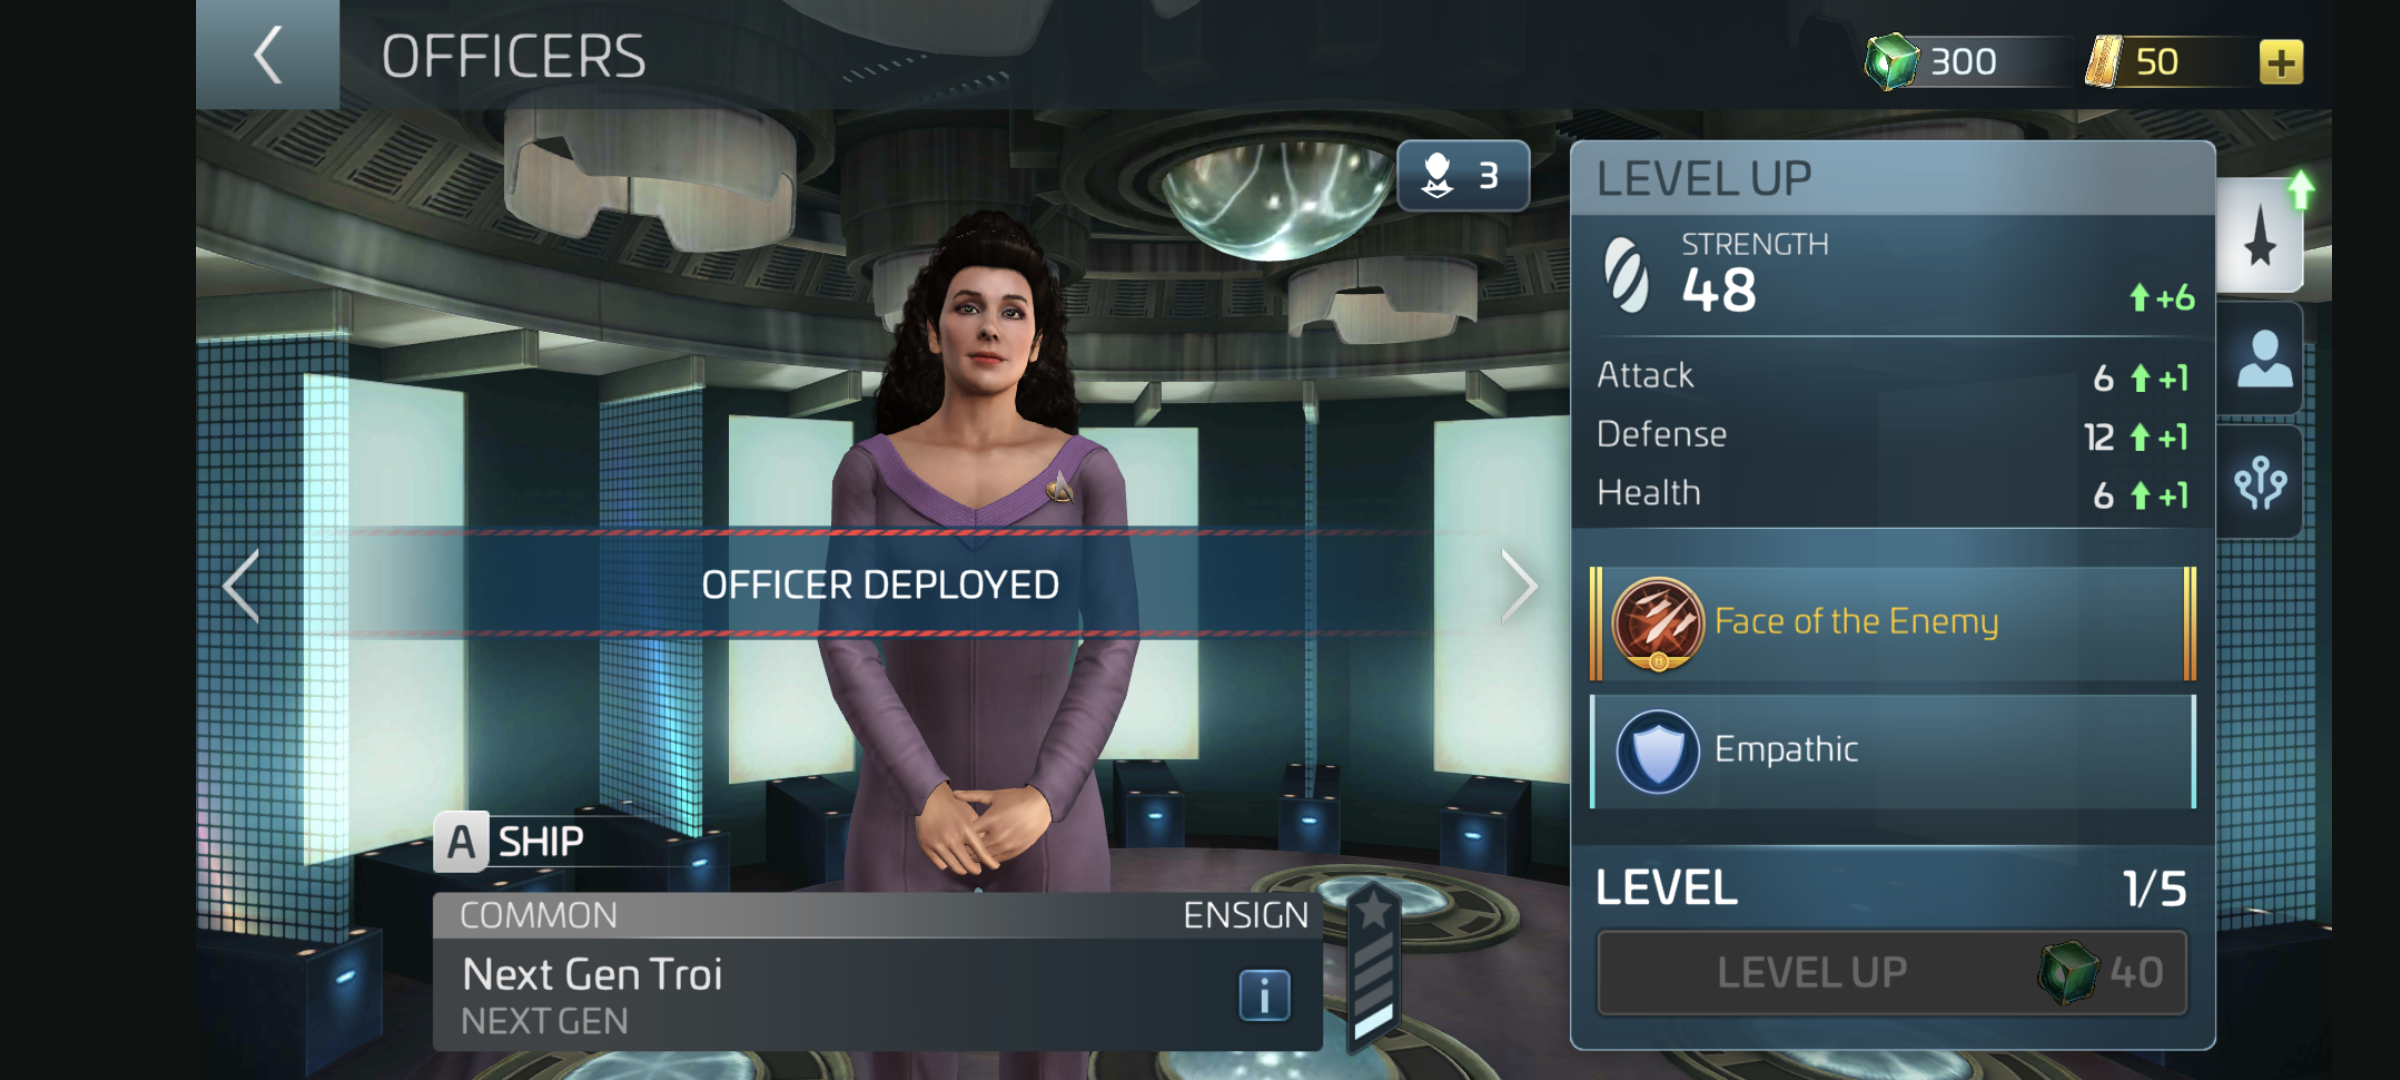 Star Trek: Fleet command